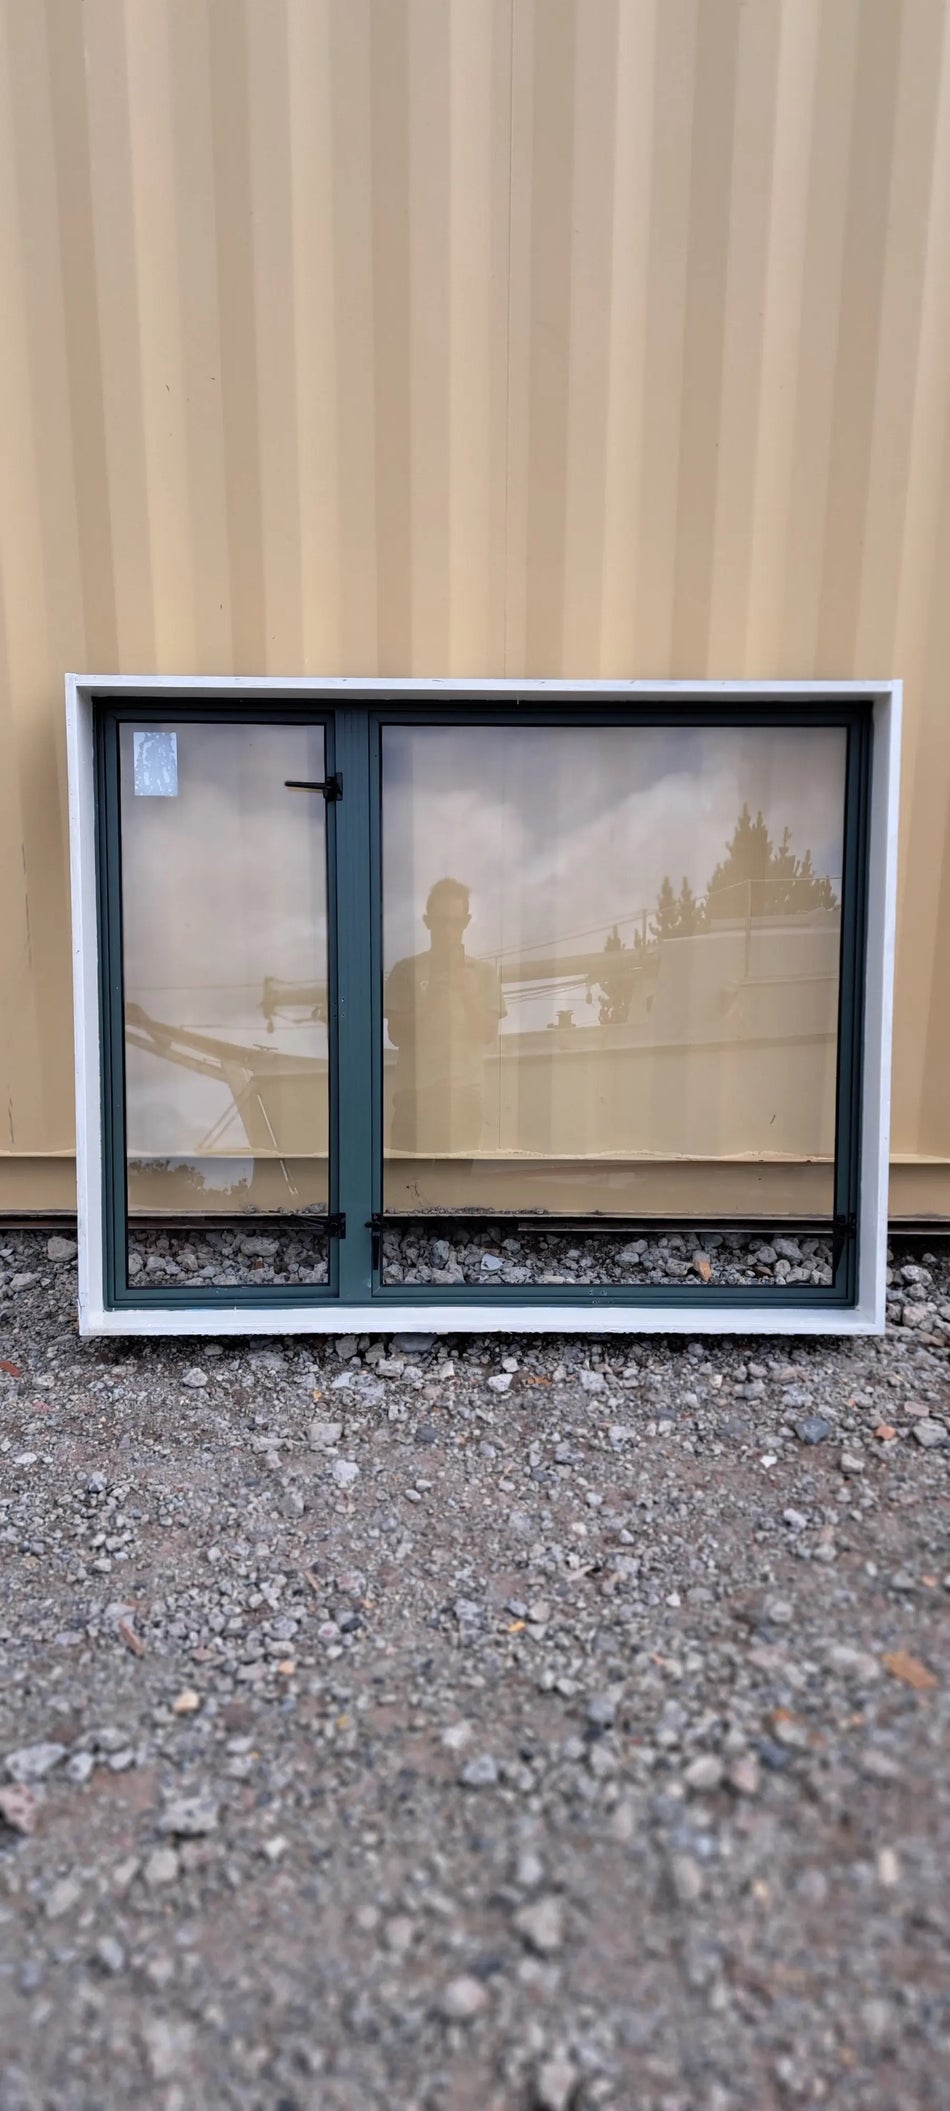 Green Aluminium Window 1500 W x 1200 H [#4066aSF] Joinery Recycle